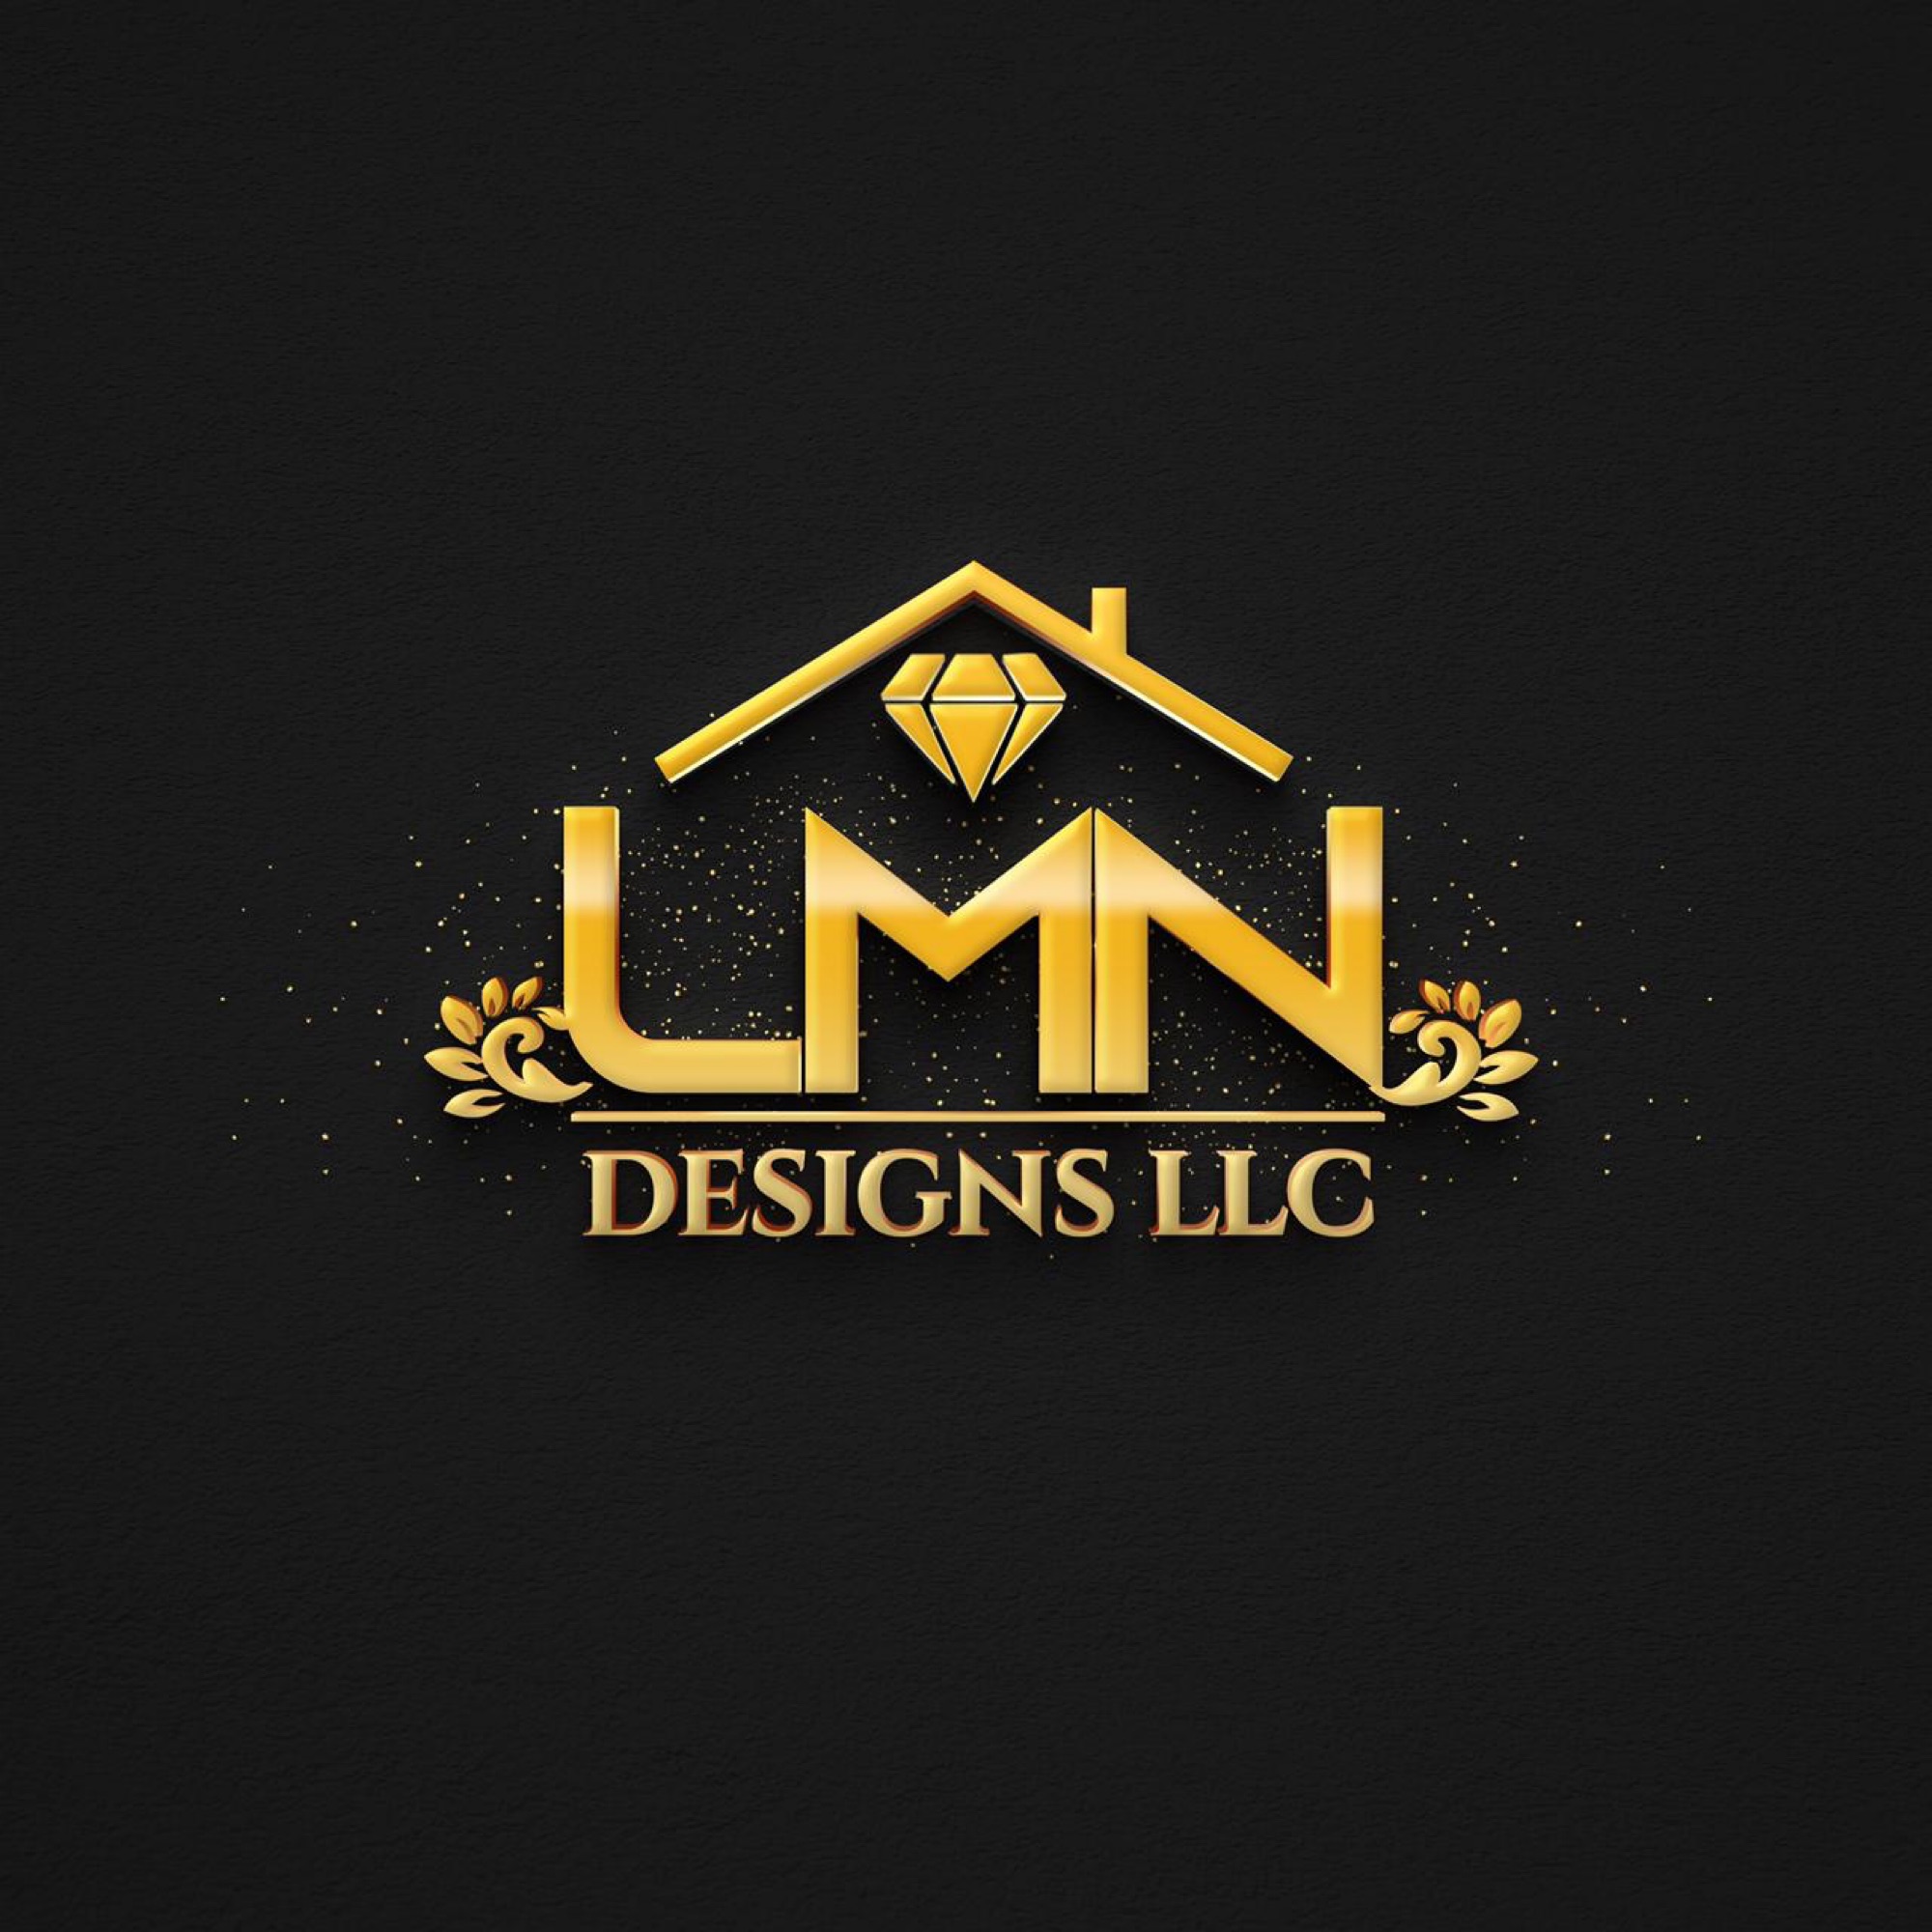 LMN Designs, LLC Logo